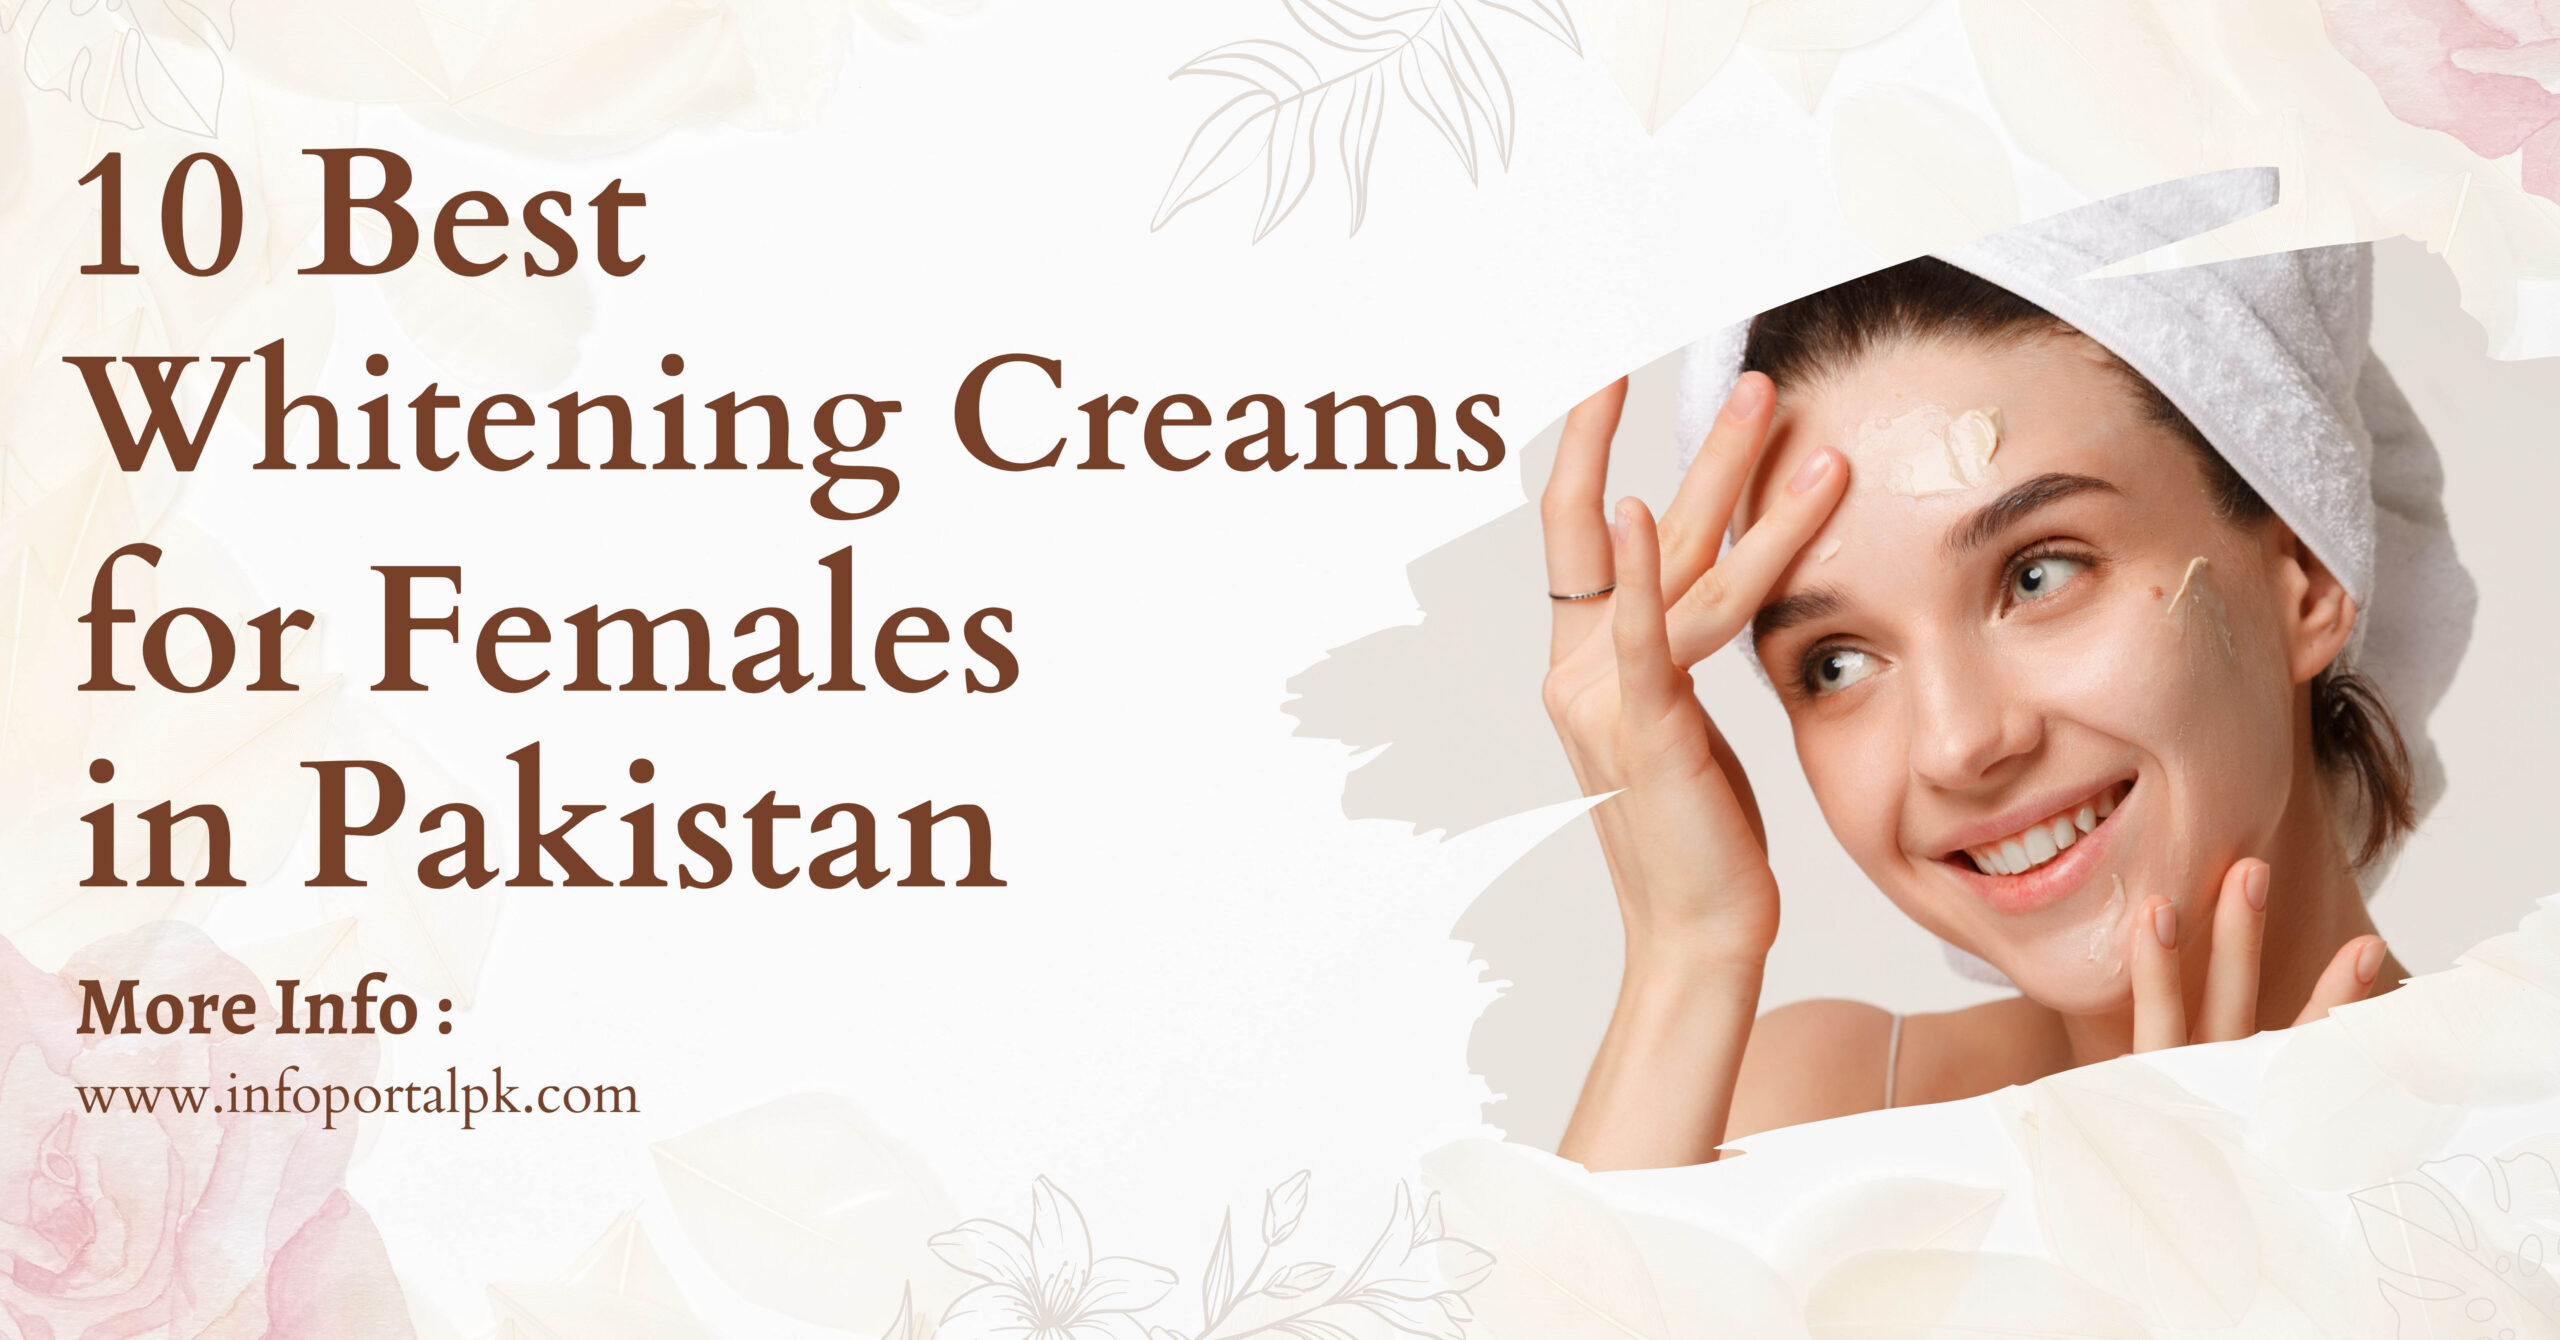 10 Best Whitening Creams for Females in Pakistan